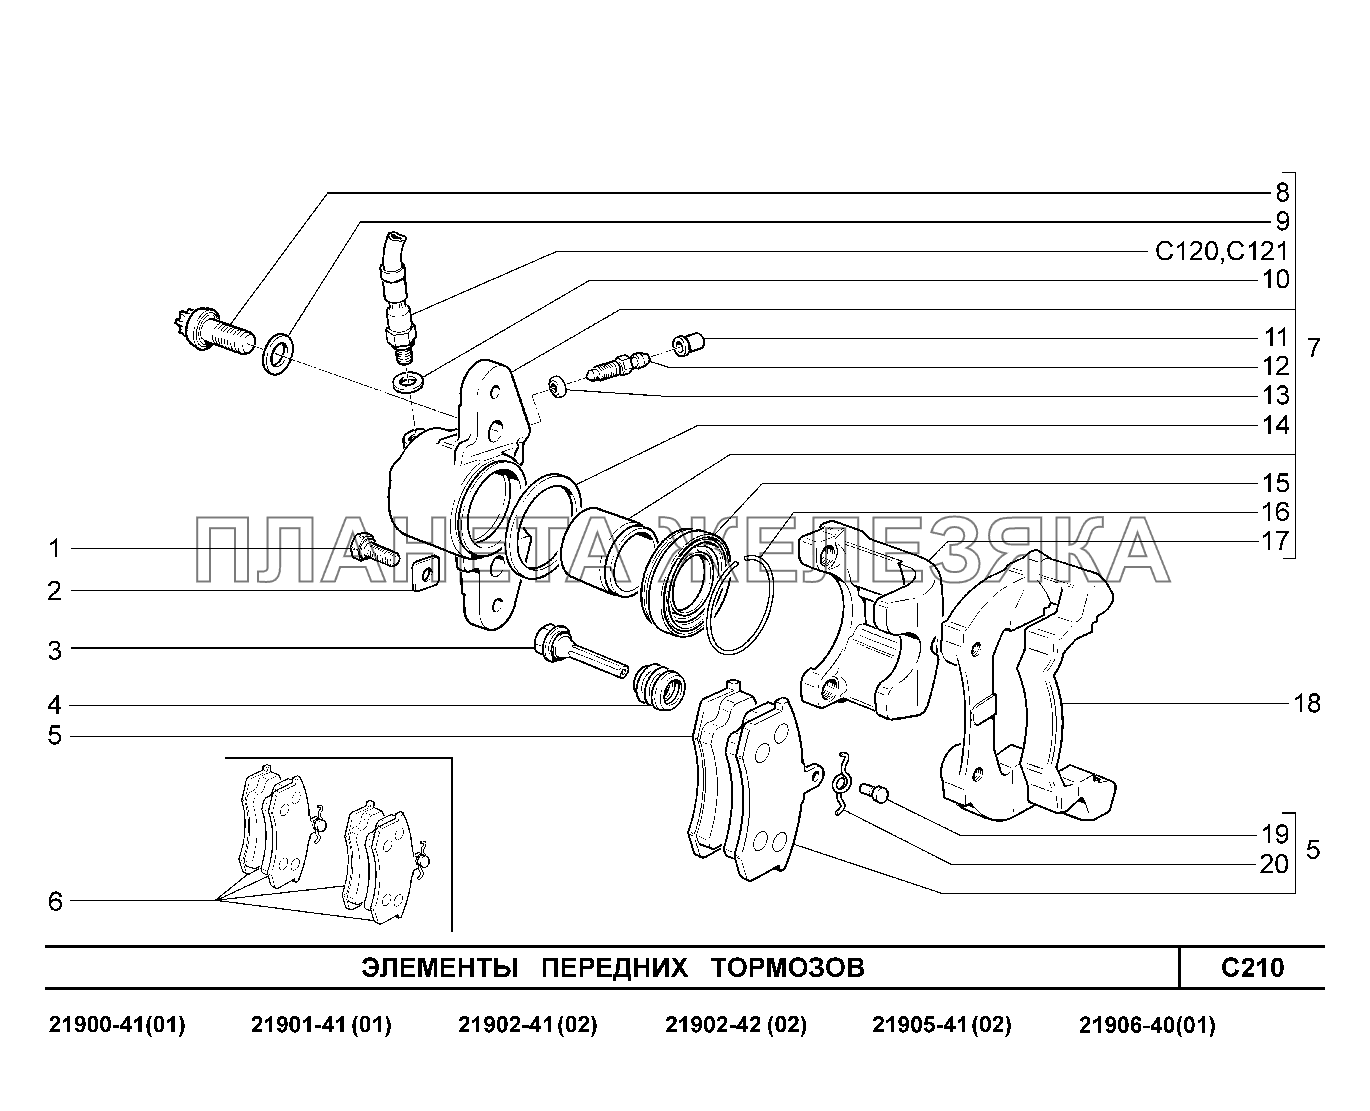 C210. Элементы передних тормозов Lada Granta-2190